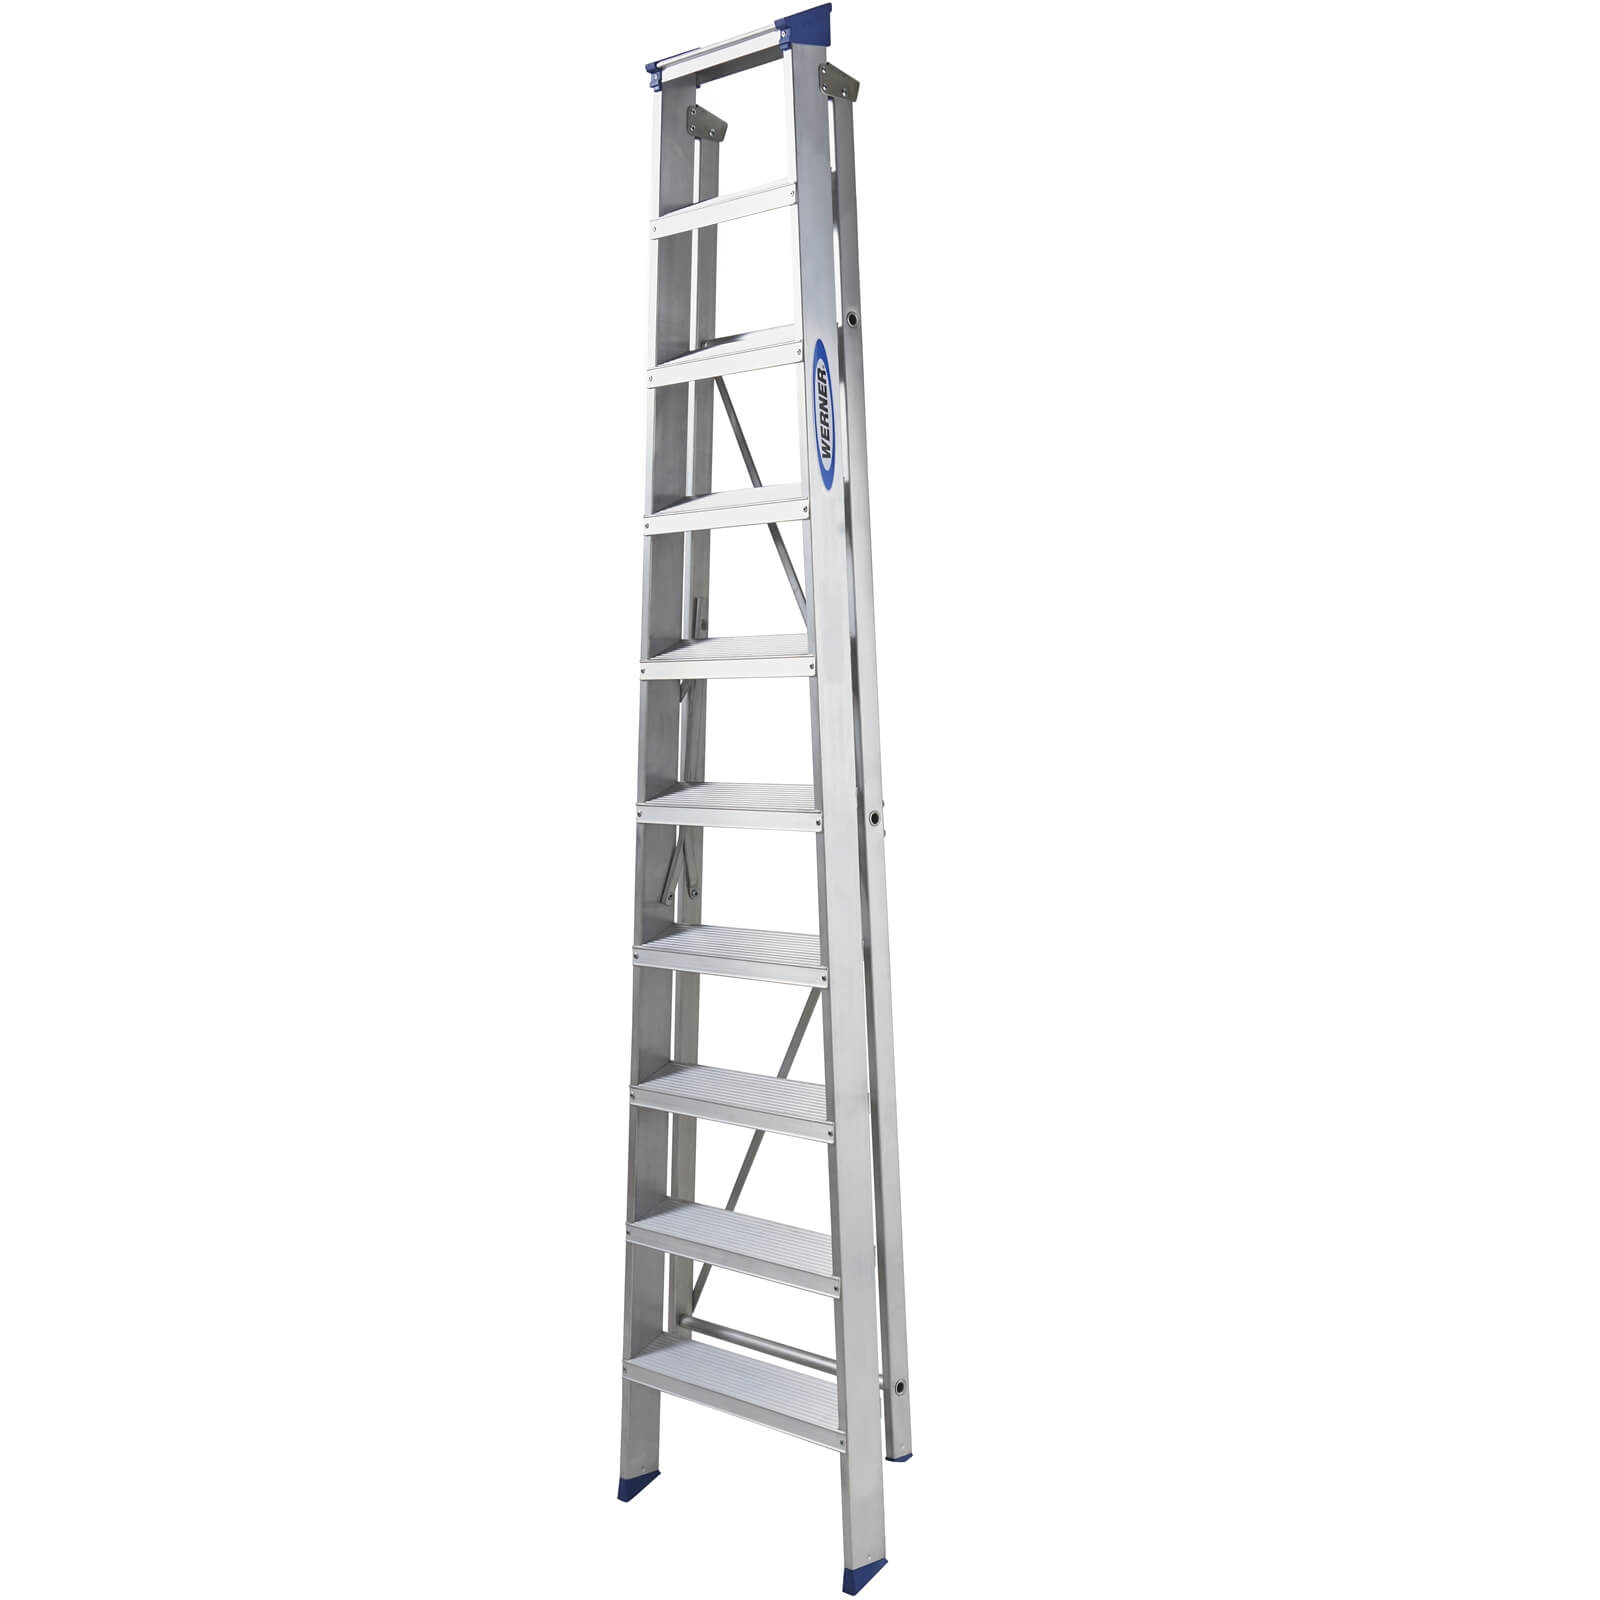 Werner MasterTrade Step Ladder - 10 Tread